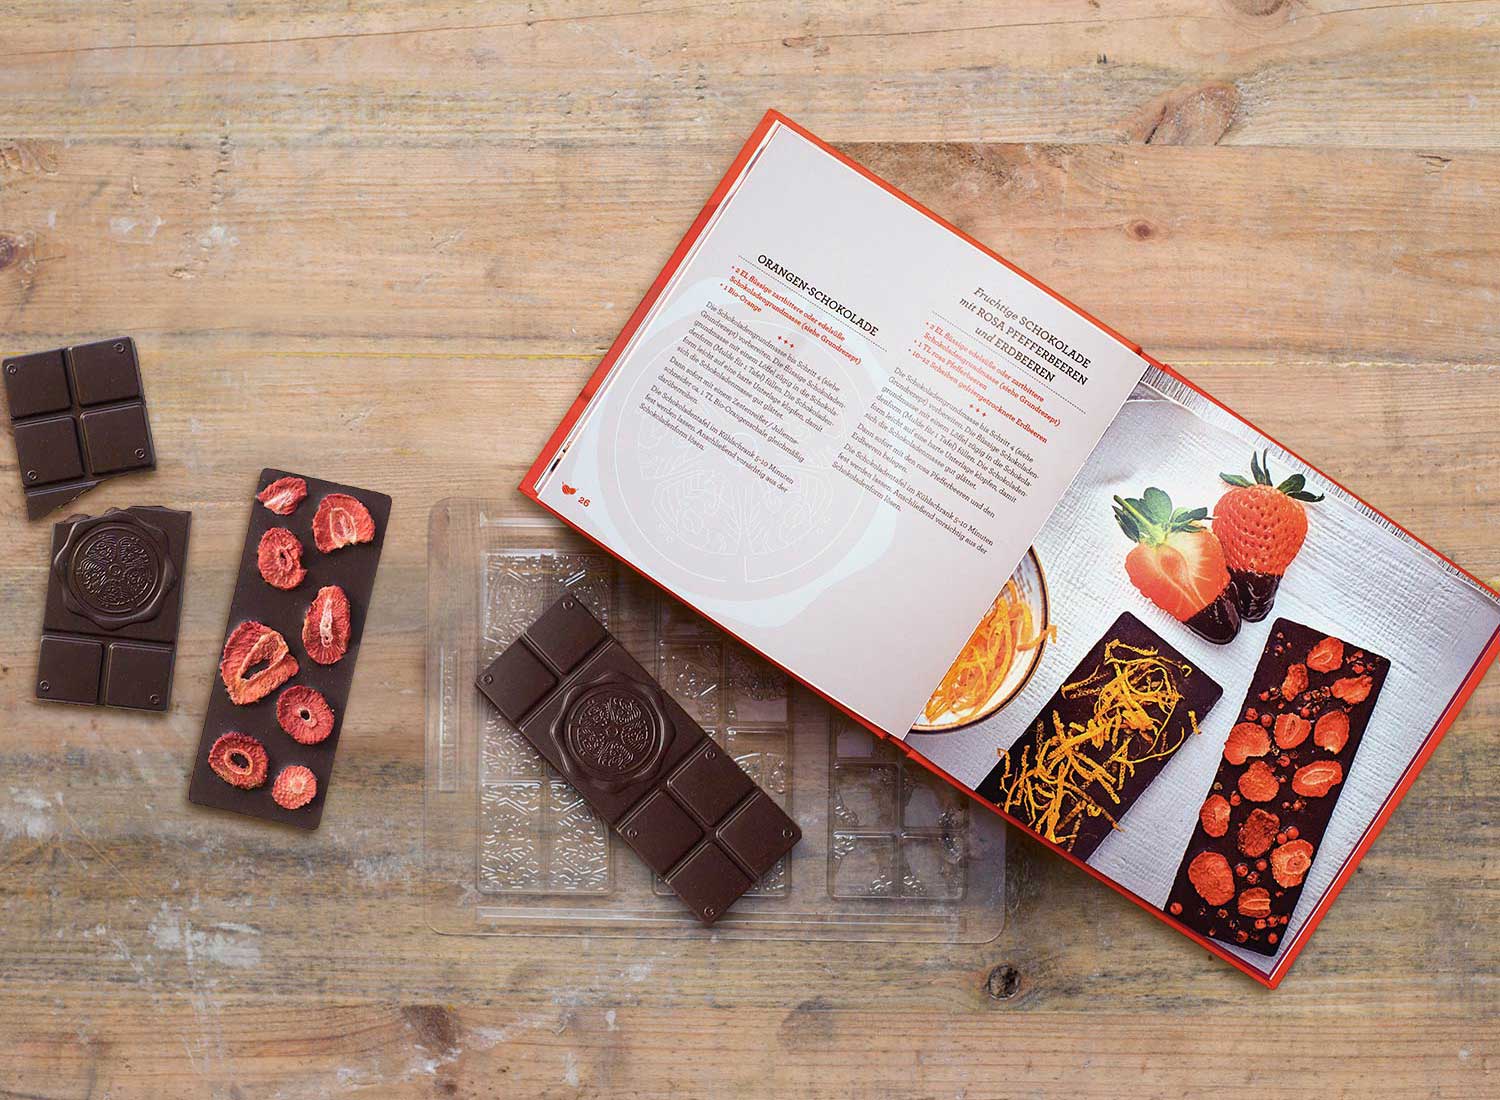 CHOCQLATE recipe book + chocolate mold